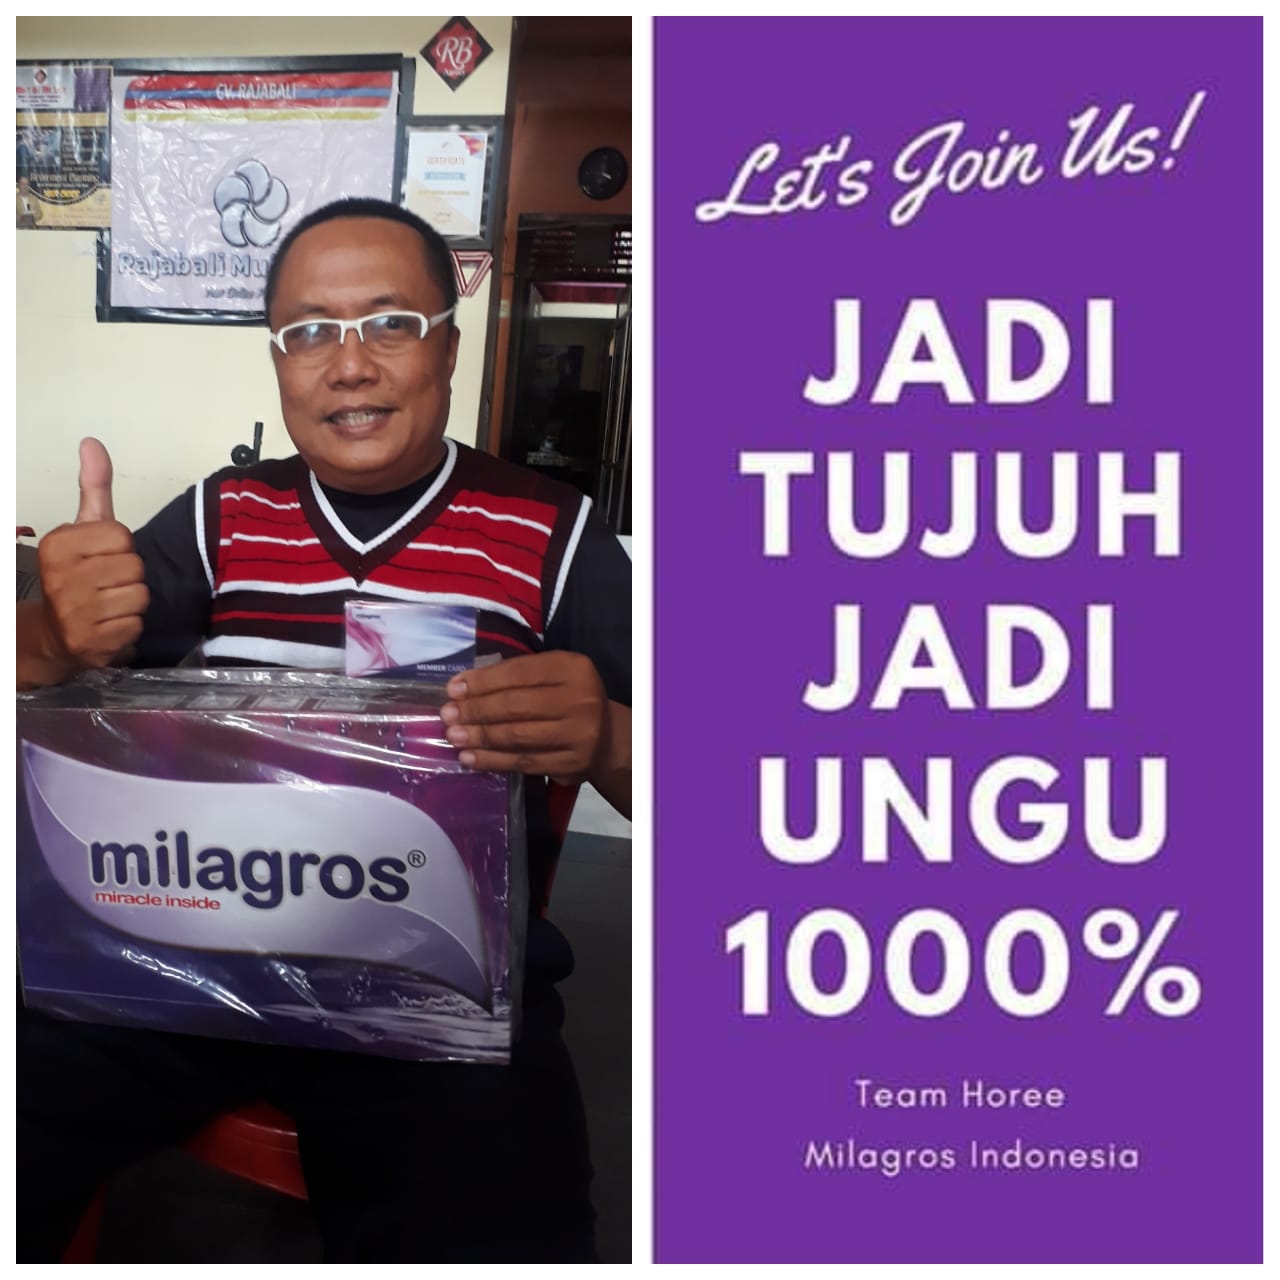 0881-405-1049 Milagros Malang Lowokwaru - Miracle Inside, lets join us, jadi tujuh, jadi ungu 1000%